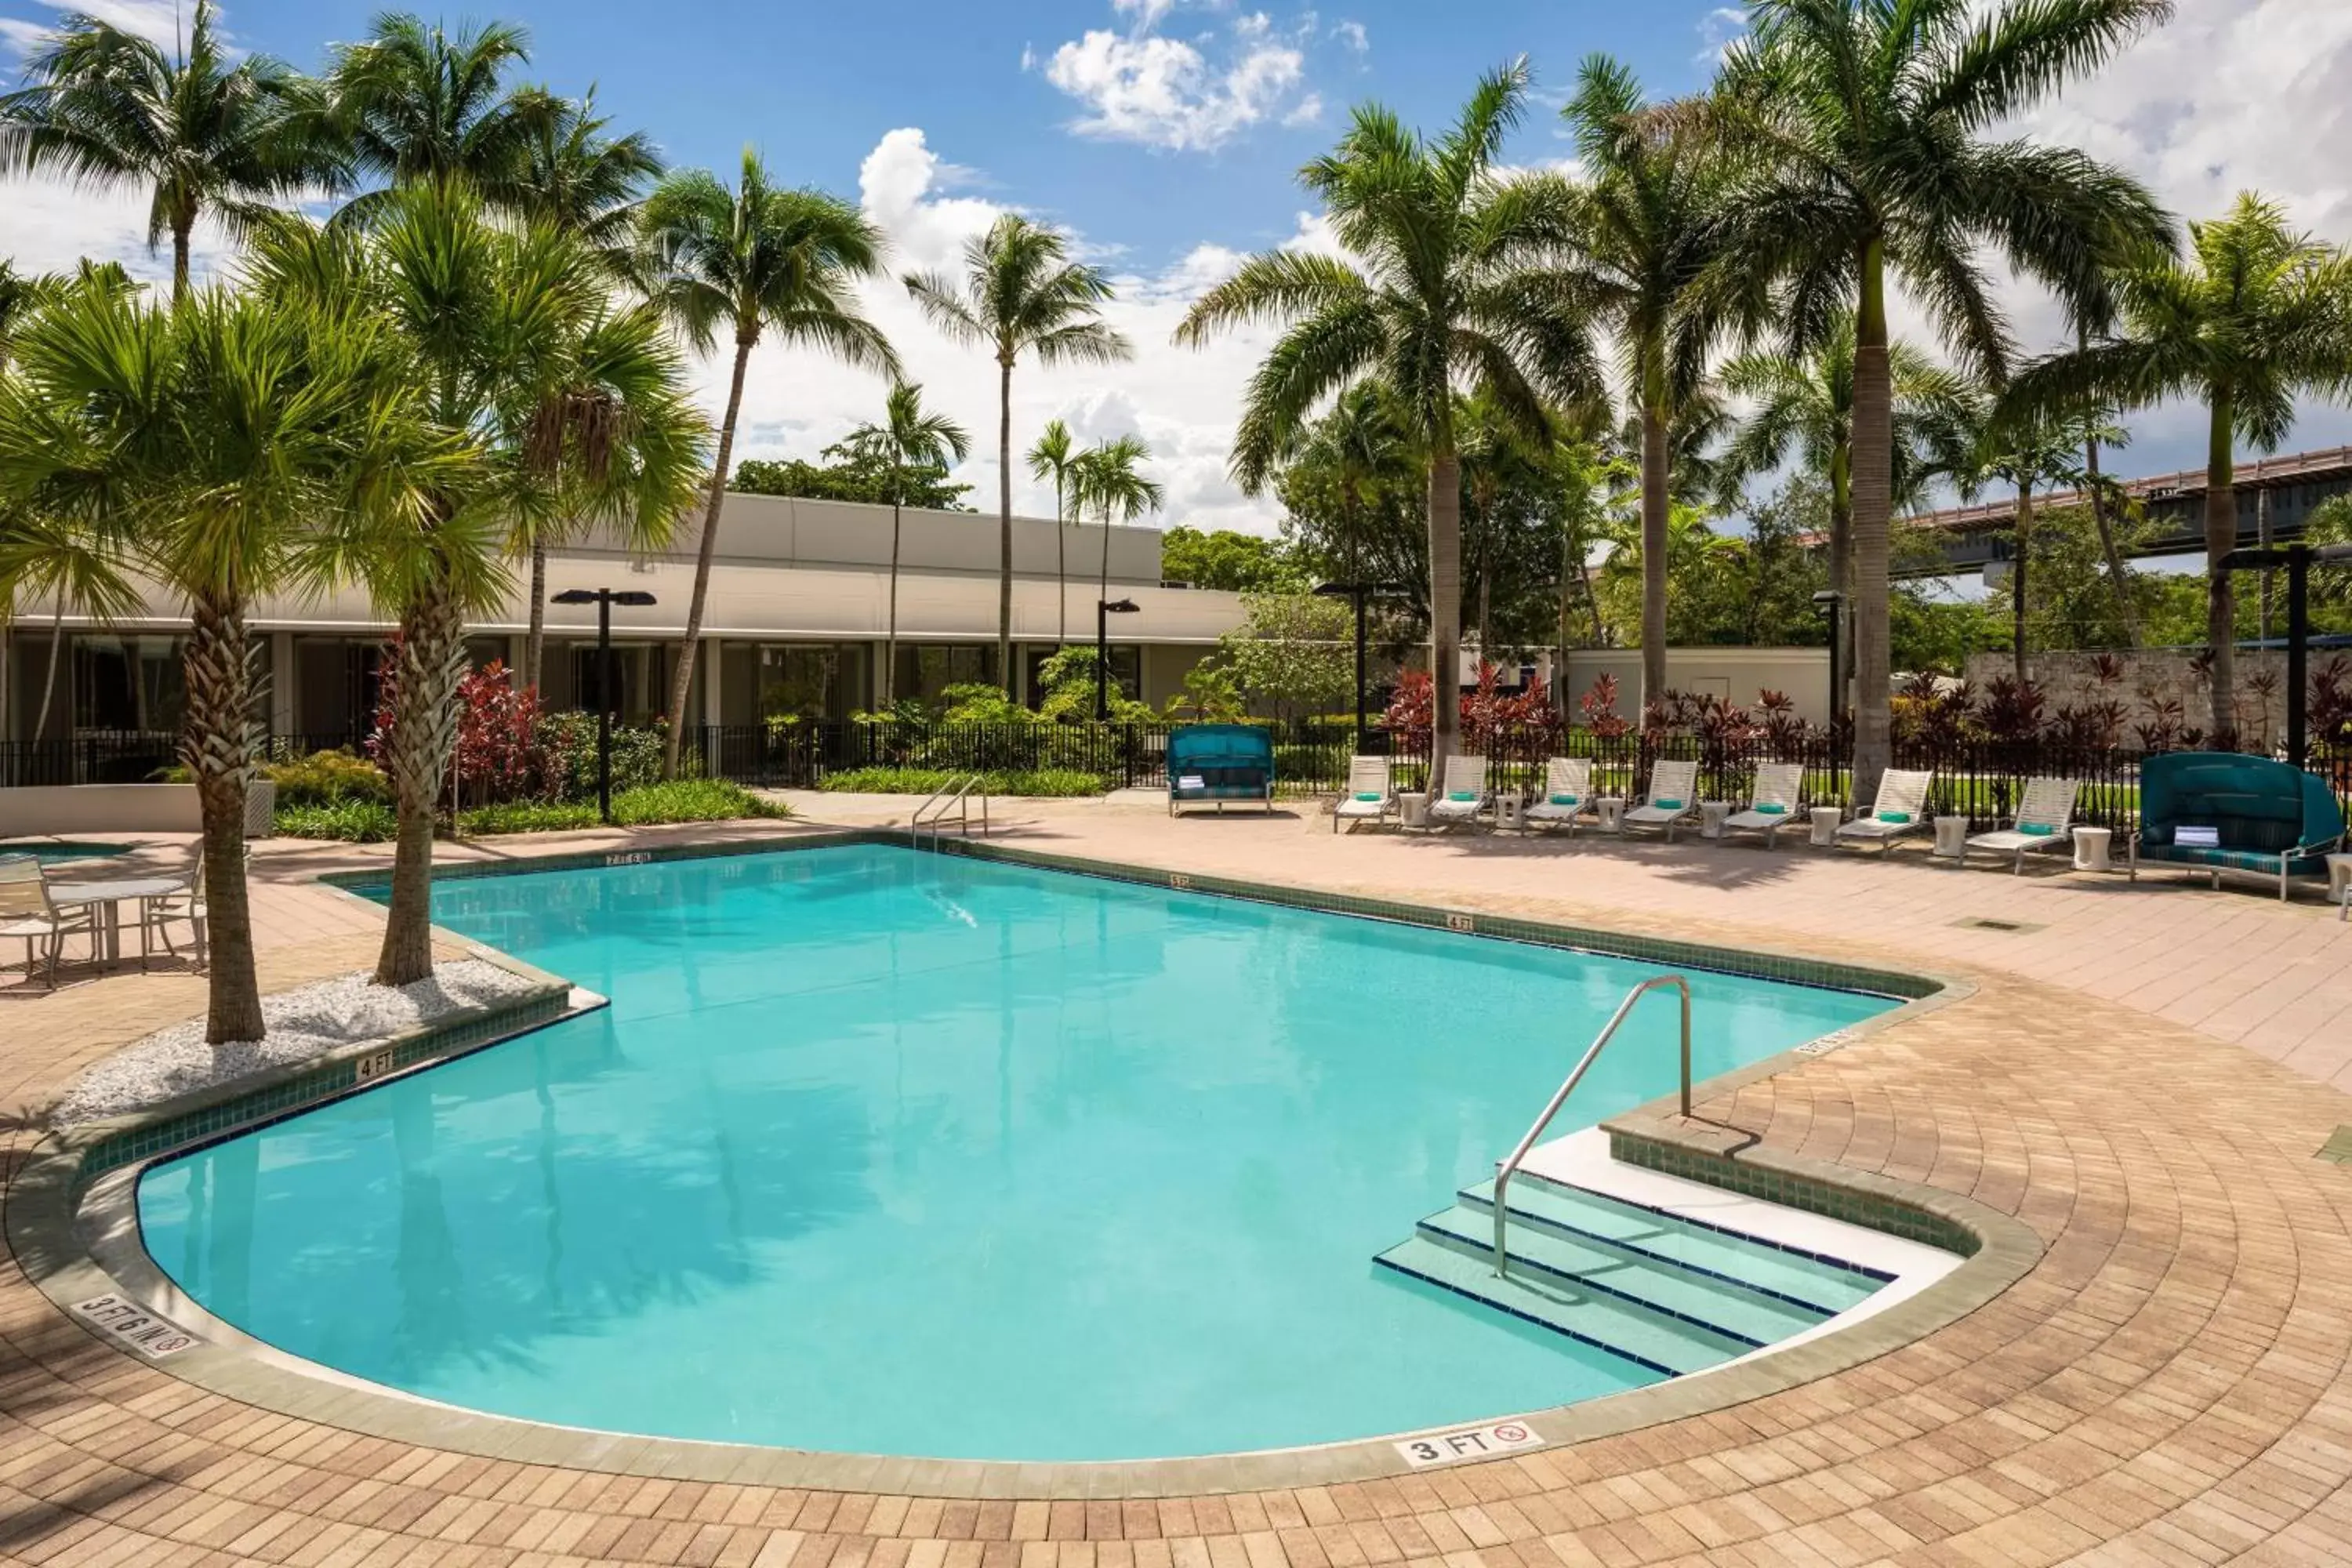 Swimming Pool in Miami Airport Marriott